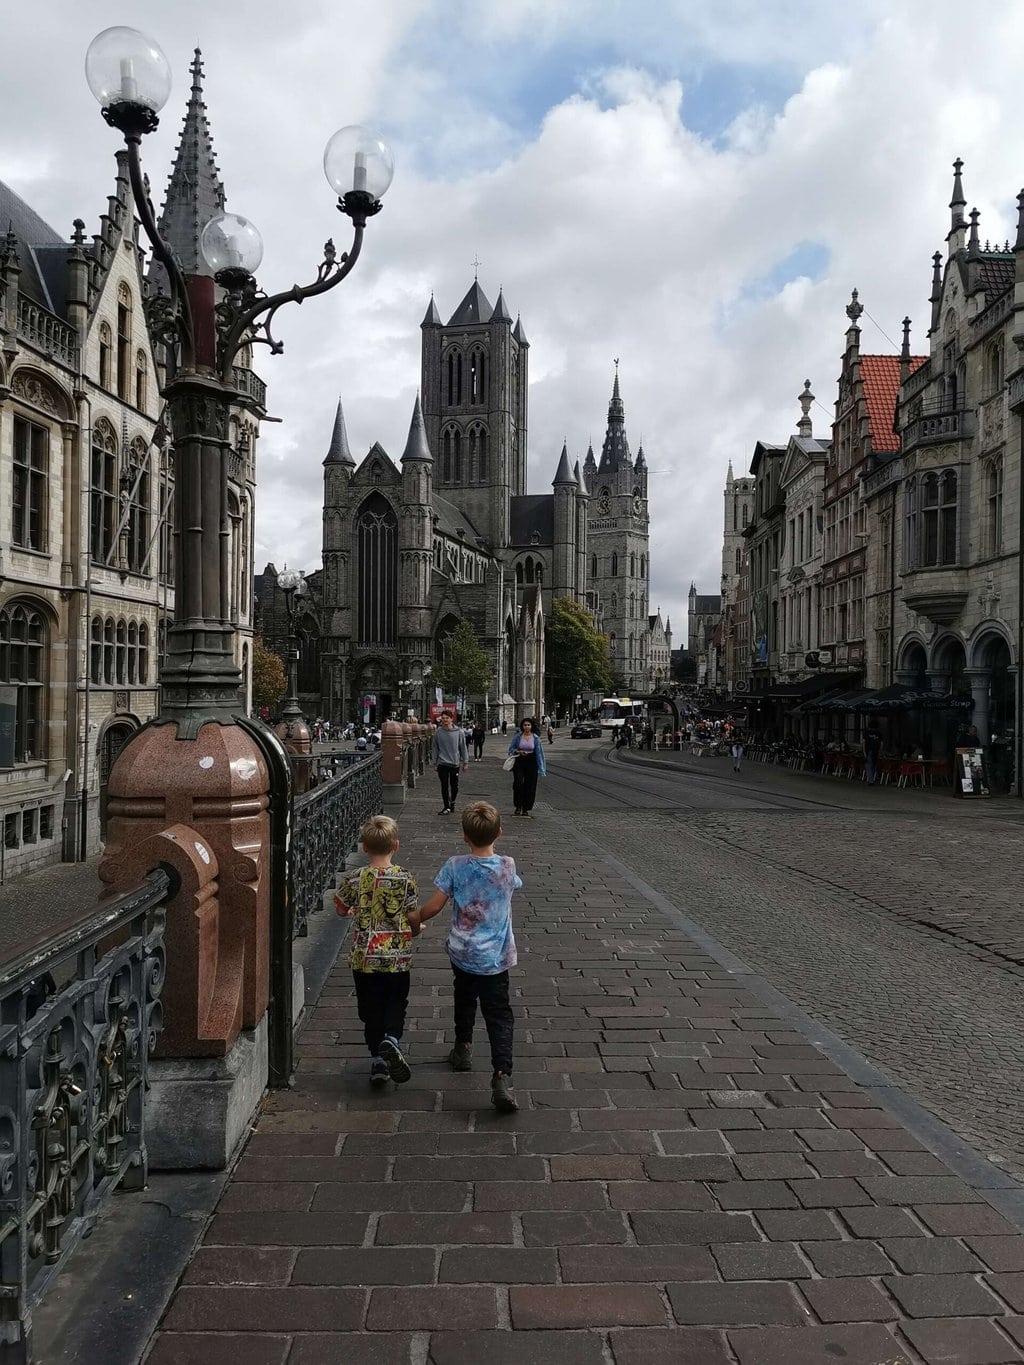 Ghent | Europe’s best kept secret?